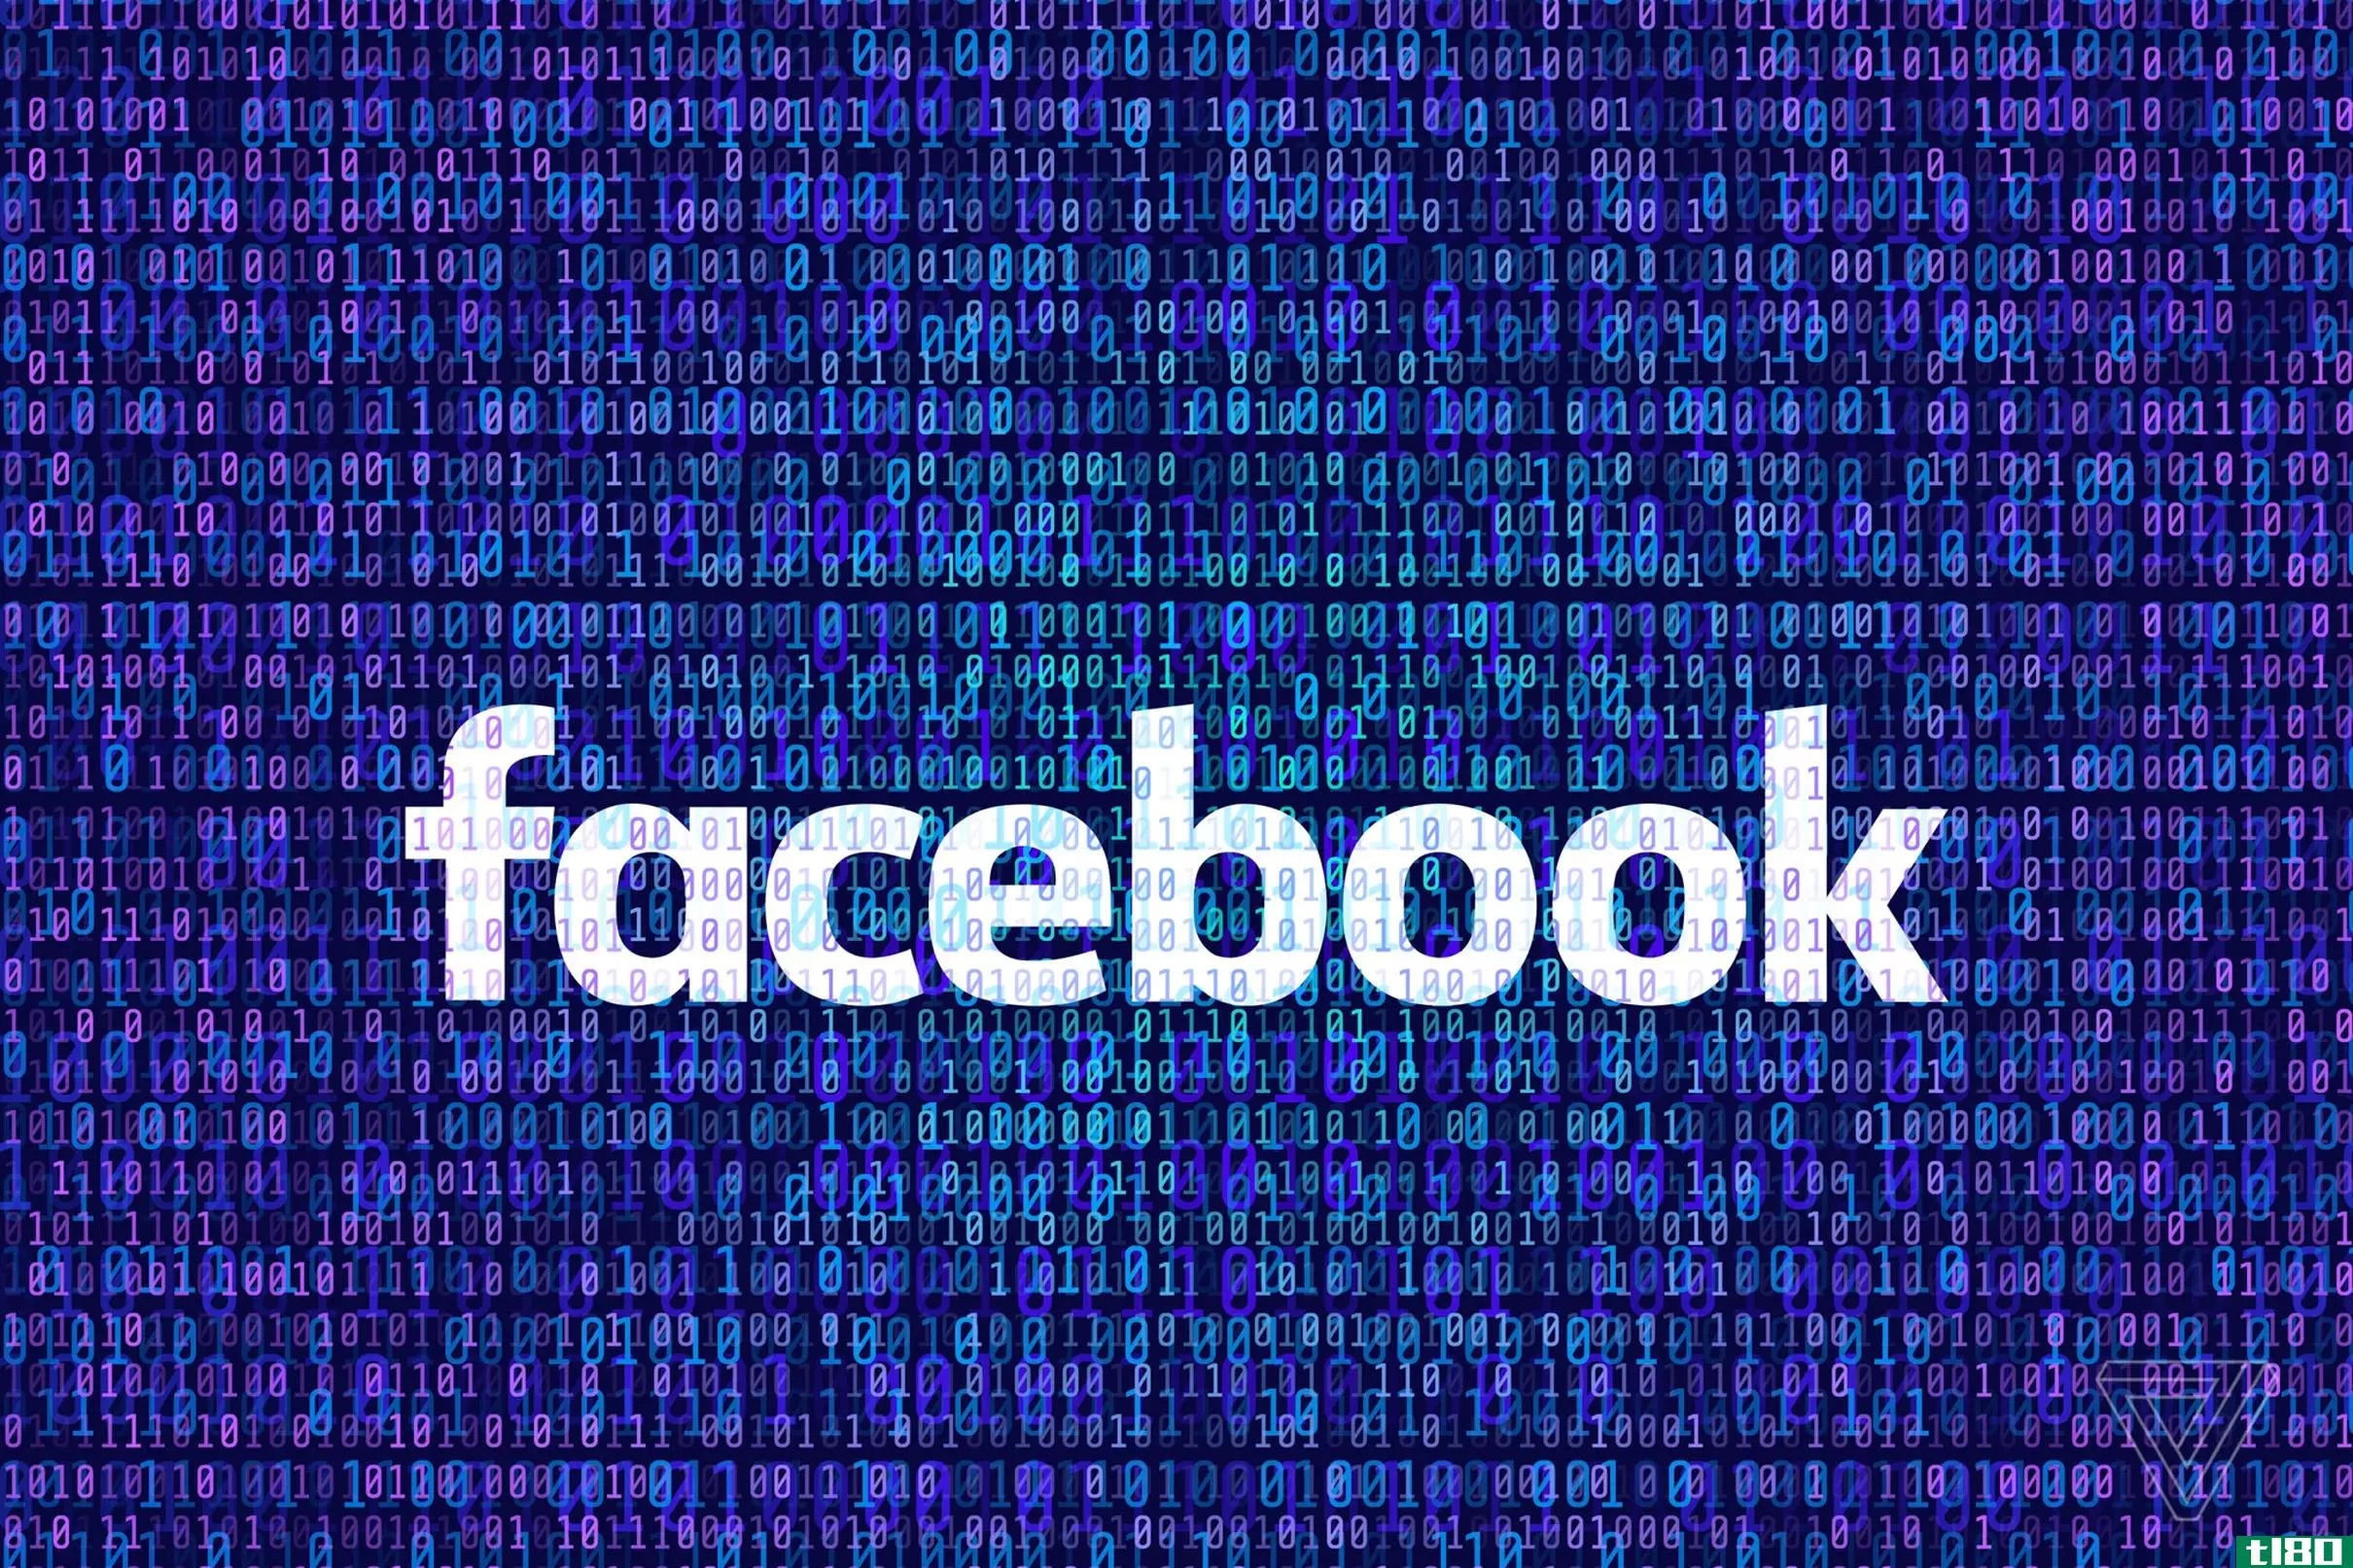 facebook审计机构点名马克•扎克伯格（mark zuckerberg）做出了“令人烦恼和心碎的决定”